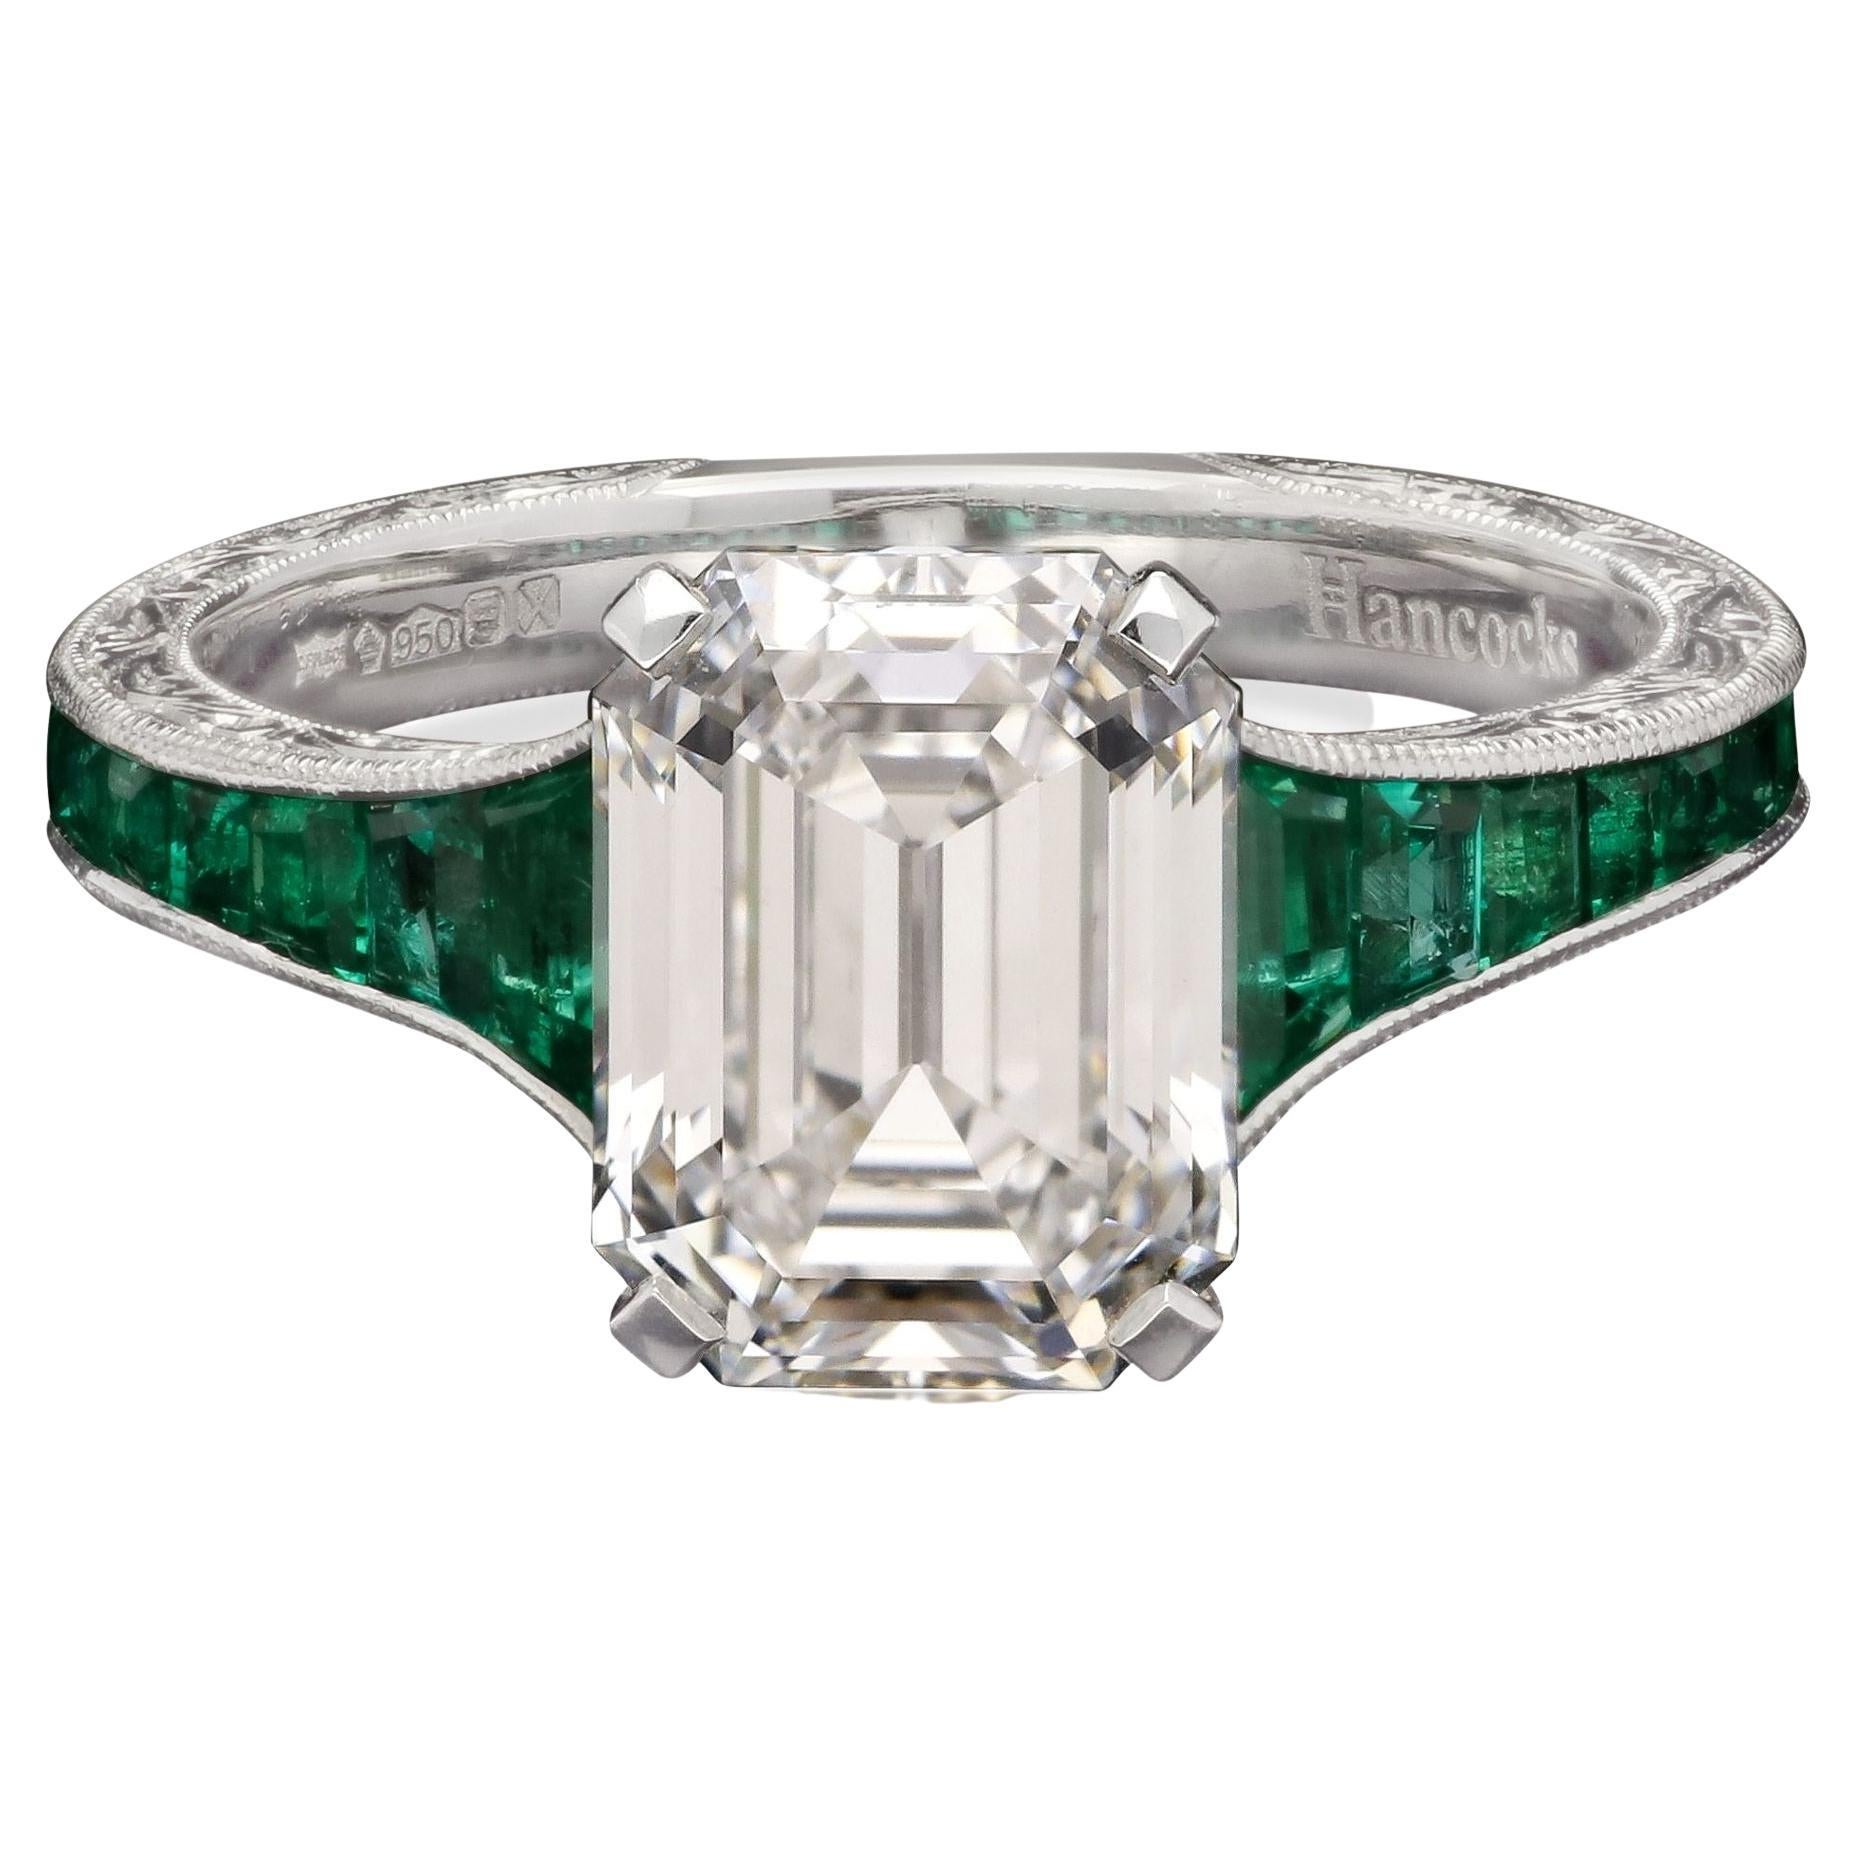 Hancocks 2.85ct Emerald-Cut Diamond Ring with Calibre Cut Emerald Band Platinum